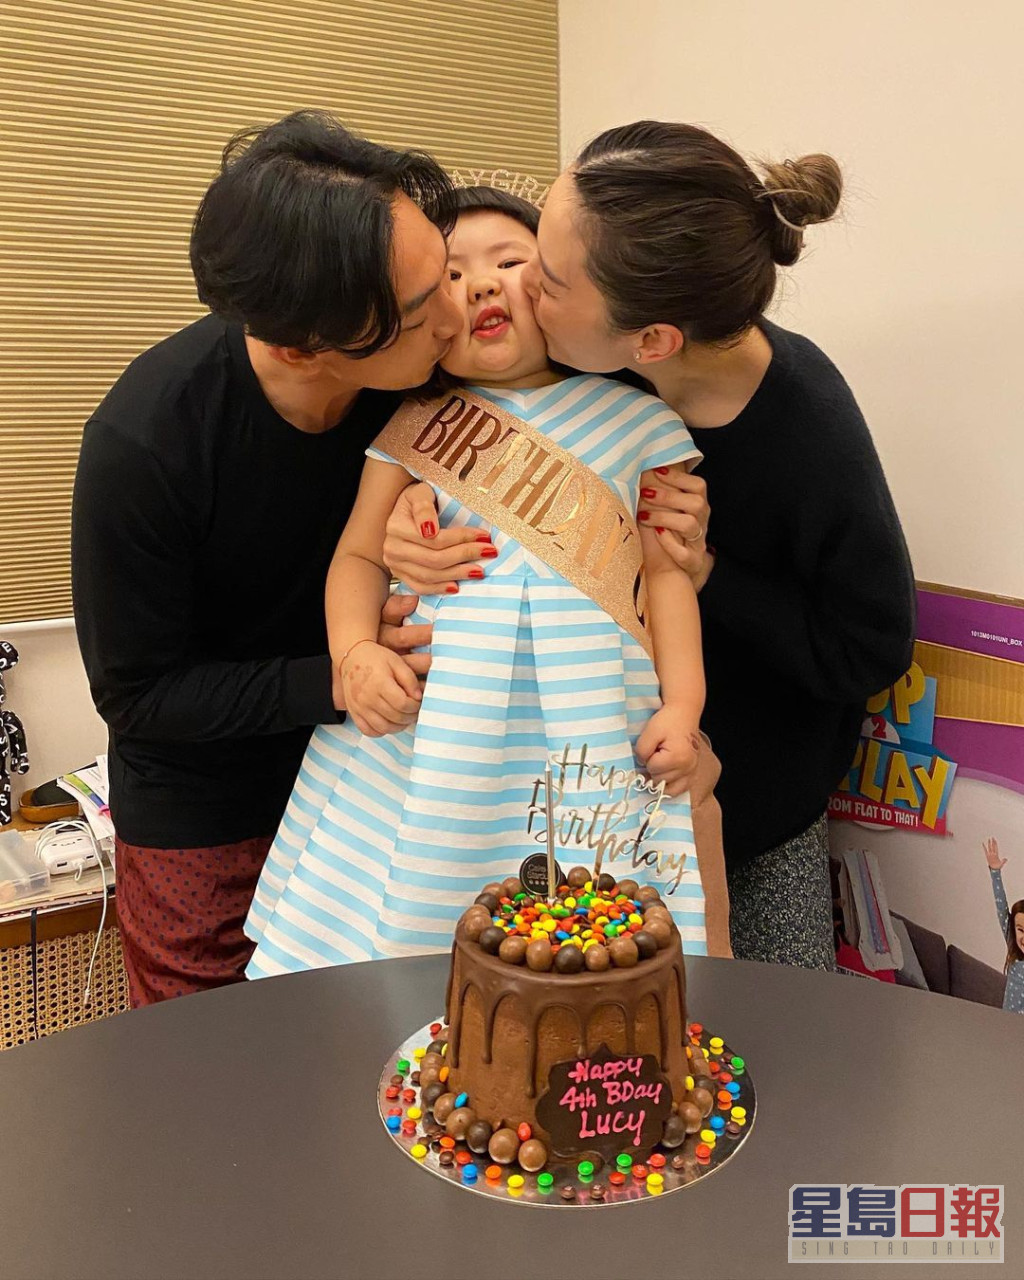 Lucy到去年庆祝4岁生日，终于有王冠、彩带、蛋糕及birthday kiss。  ​